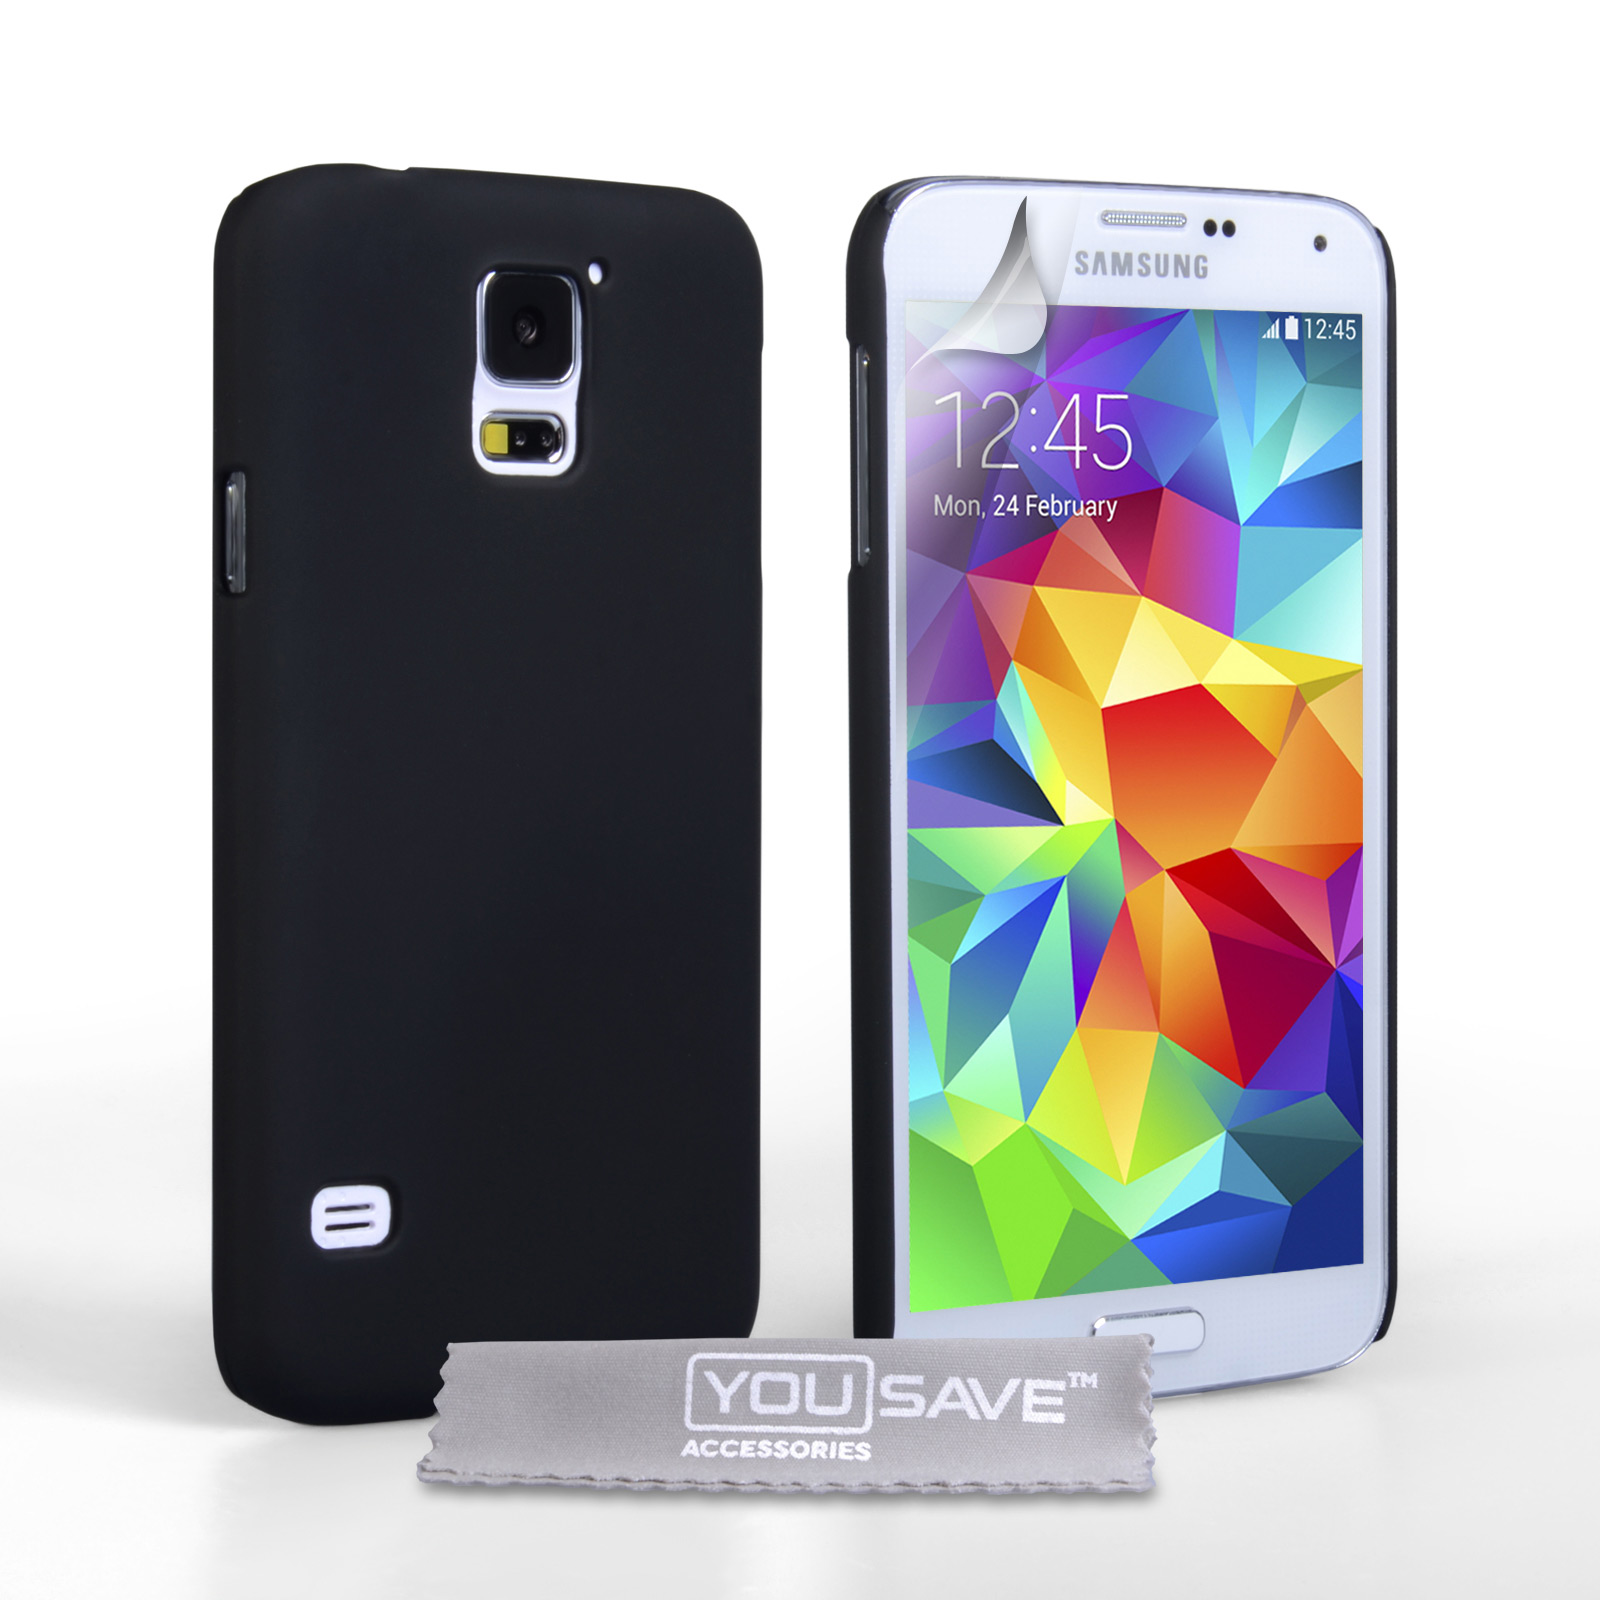 YouSave Accessories Samsung Galaxy S5 Hard Hybrid Case - Black